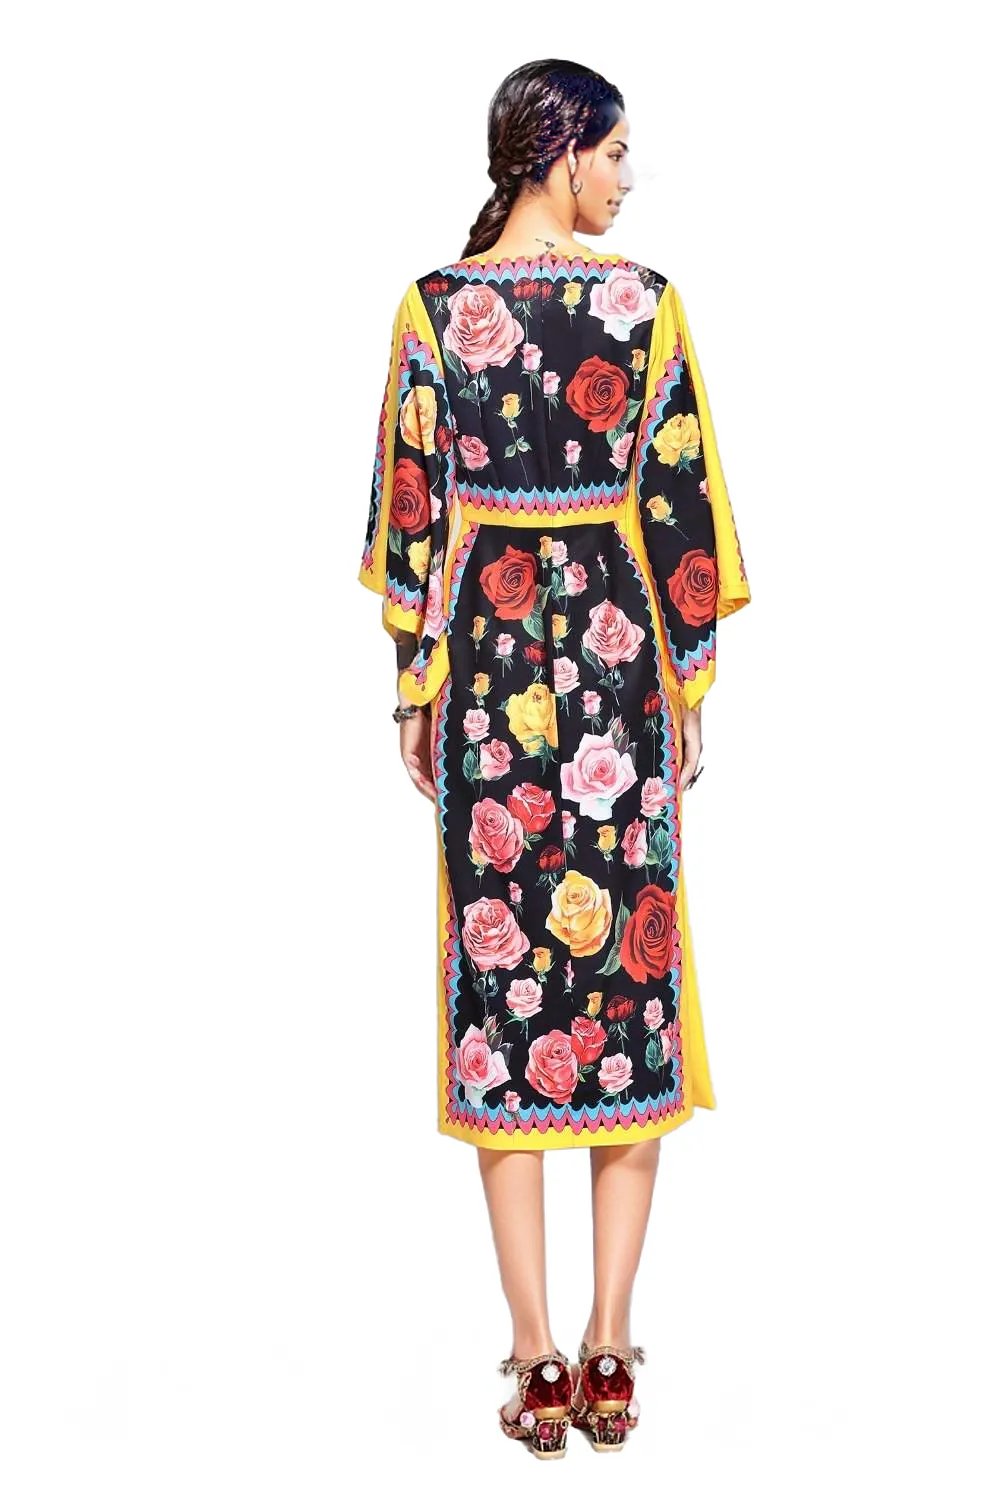 Kimber-missodd.com-Dress-فستان,in-stock,UPDATE